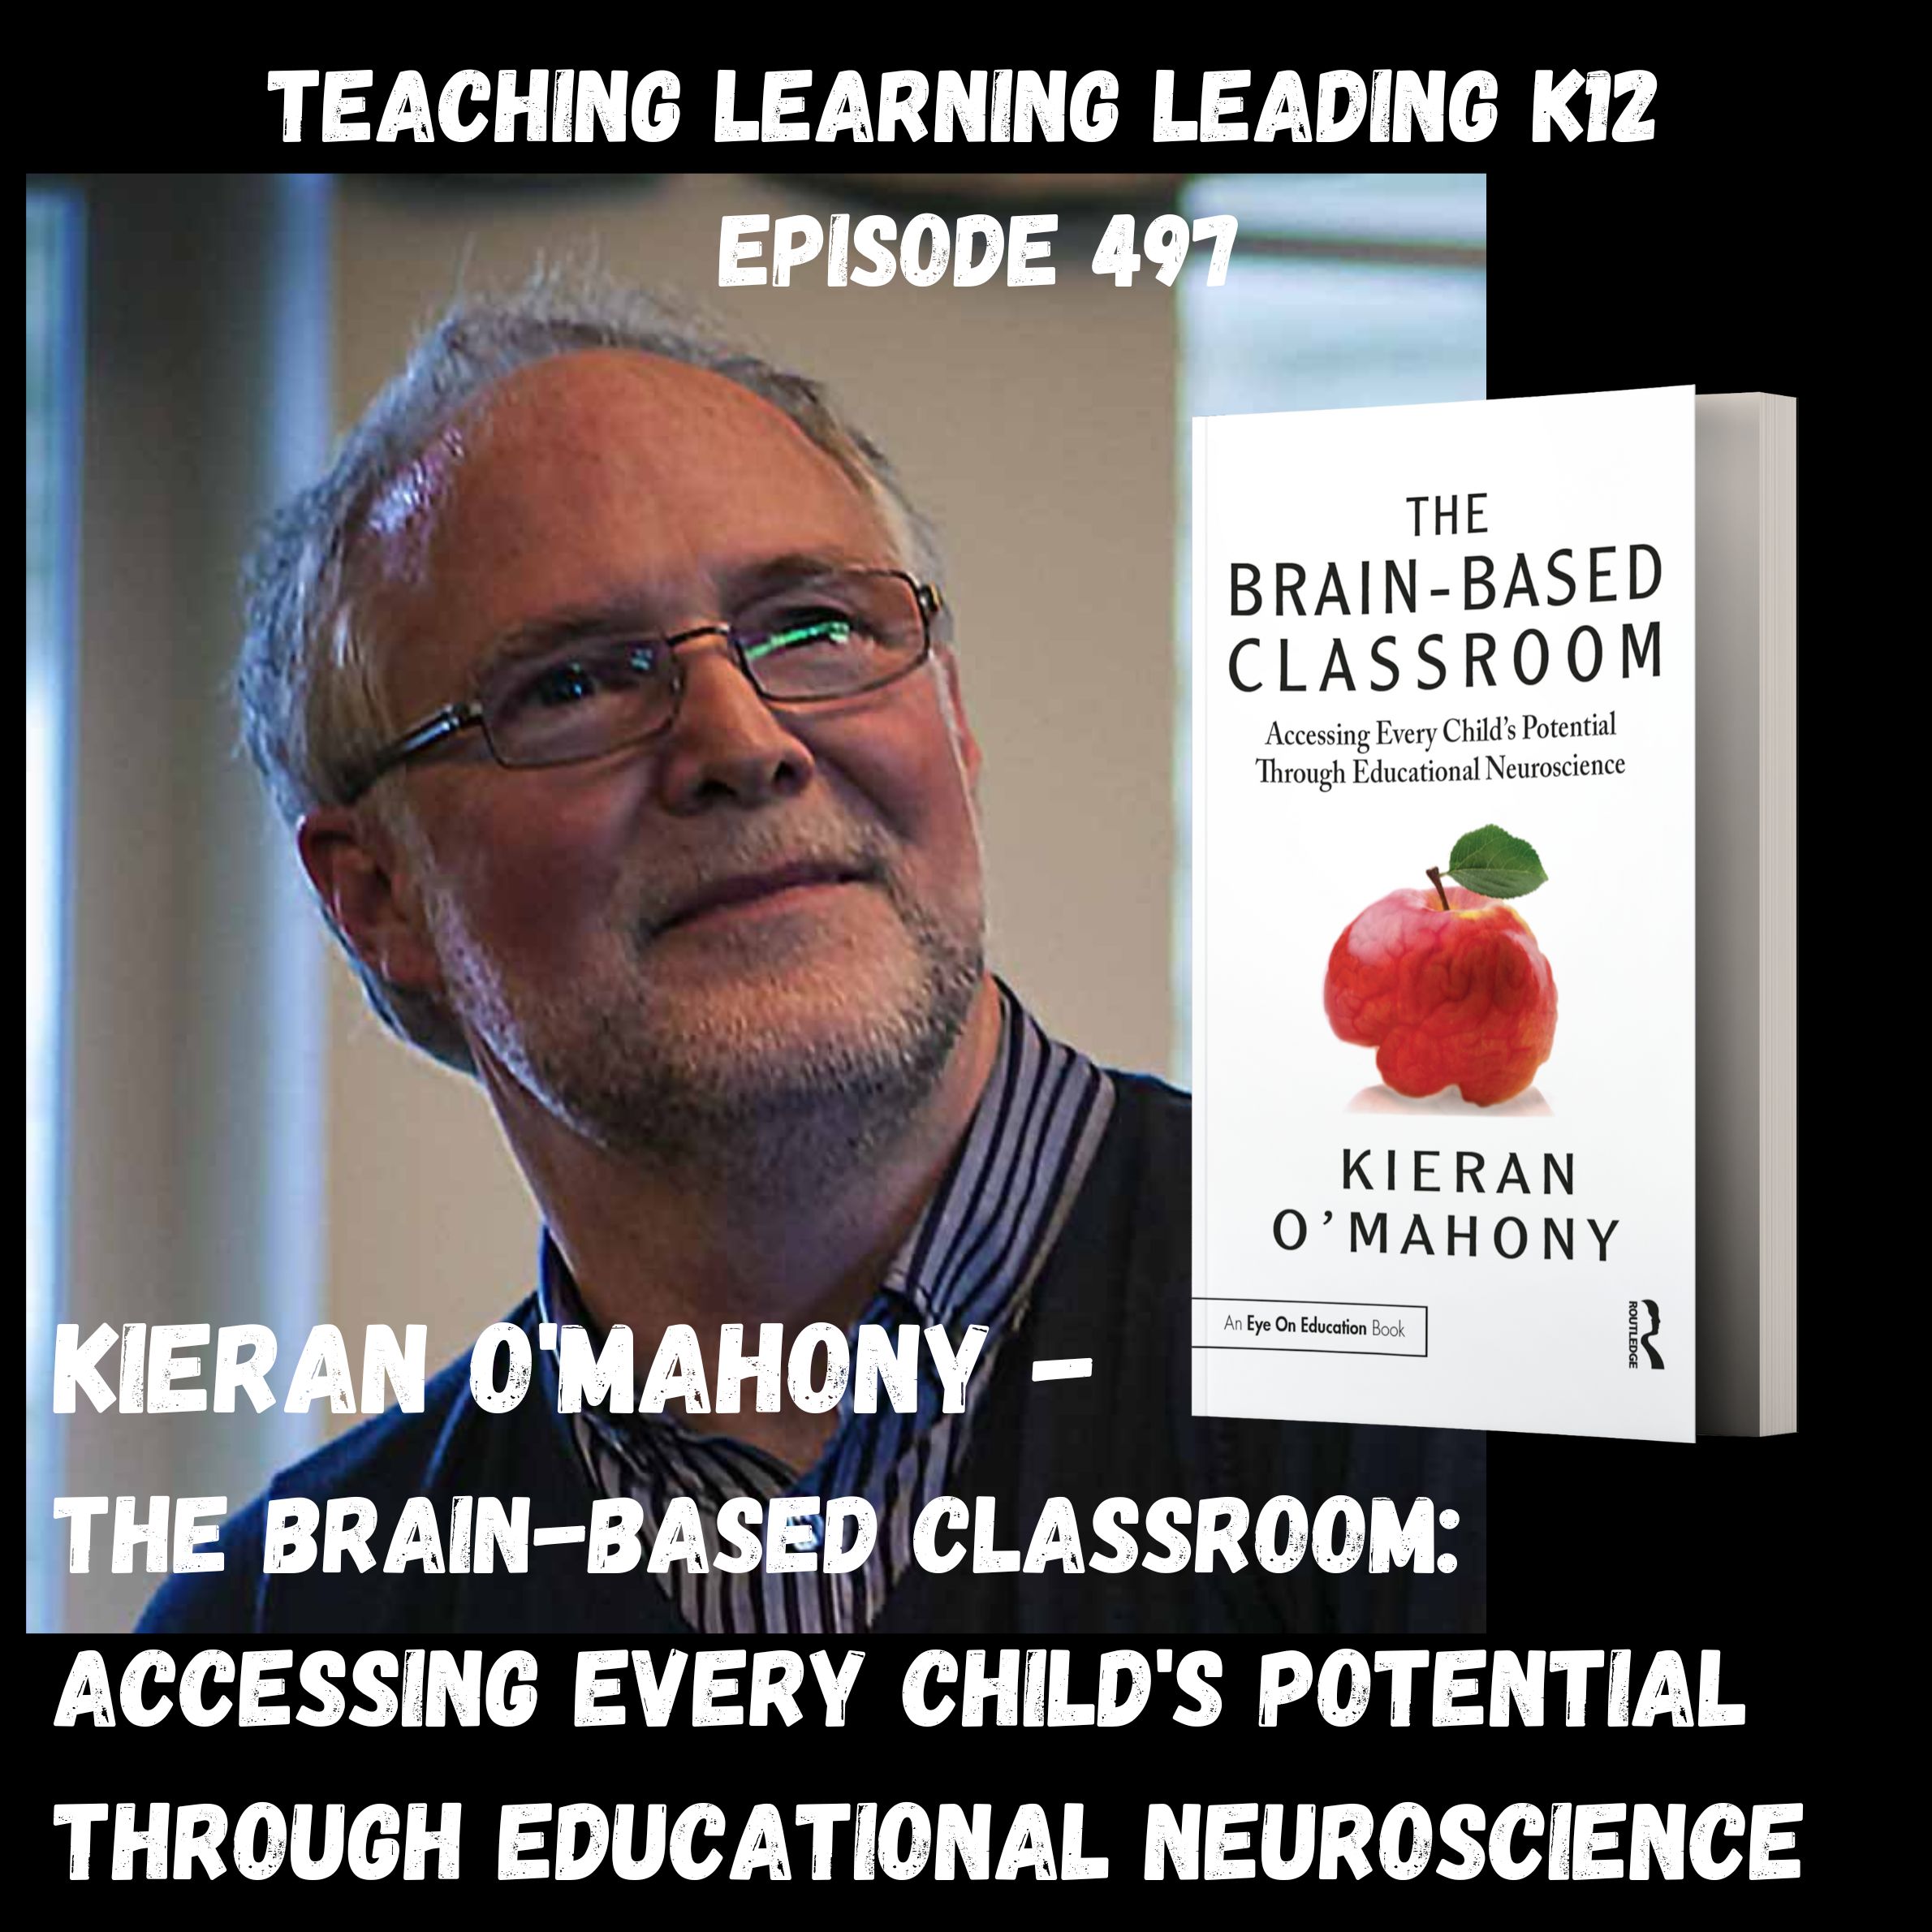 Kieran O’Mahony - The Brain-Based Classroom: Accessing Every Child’s Potential Through Educational Neuroscience - 497 Image